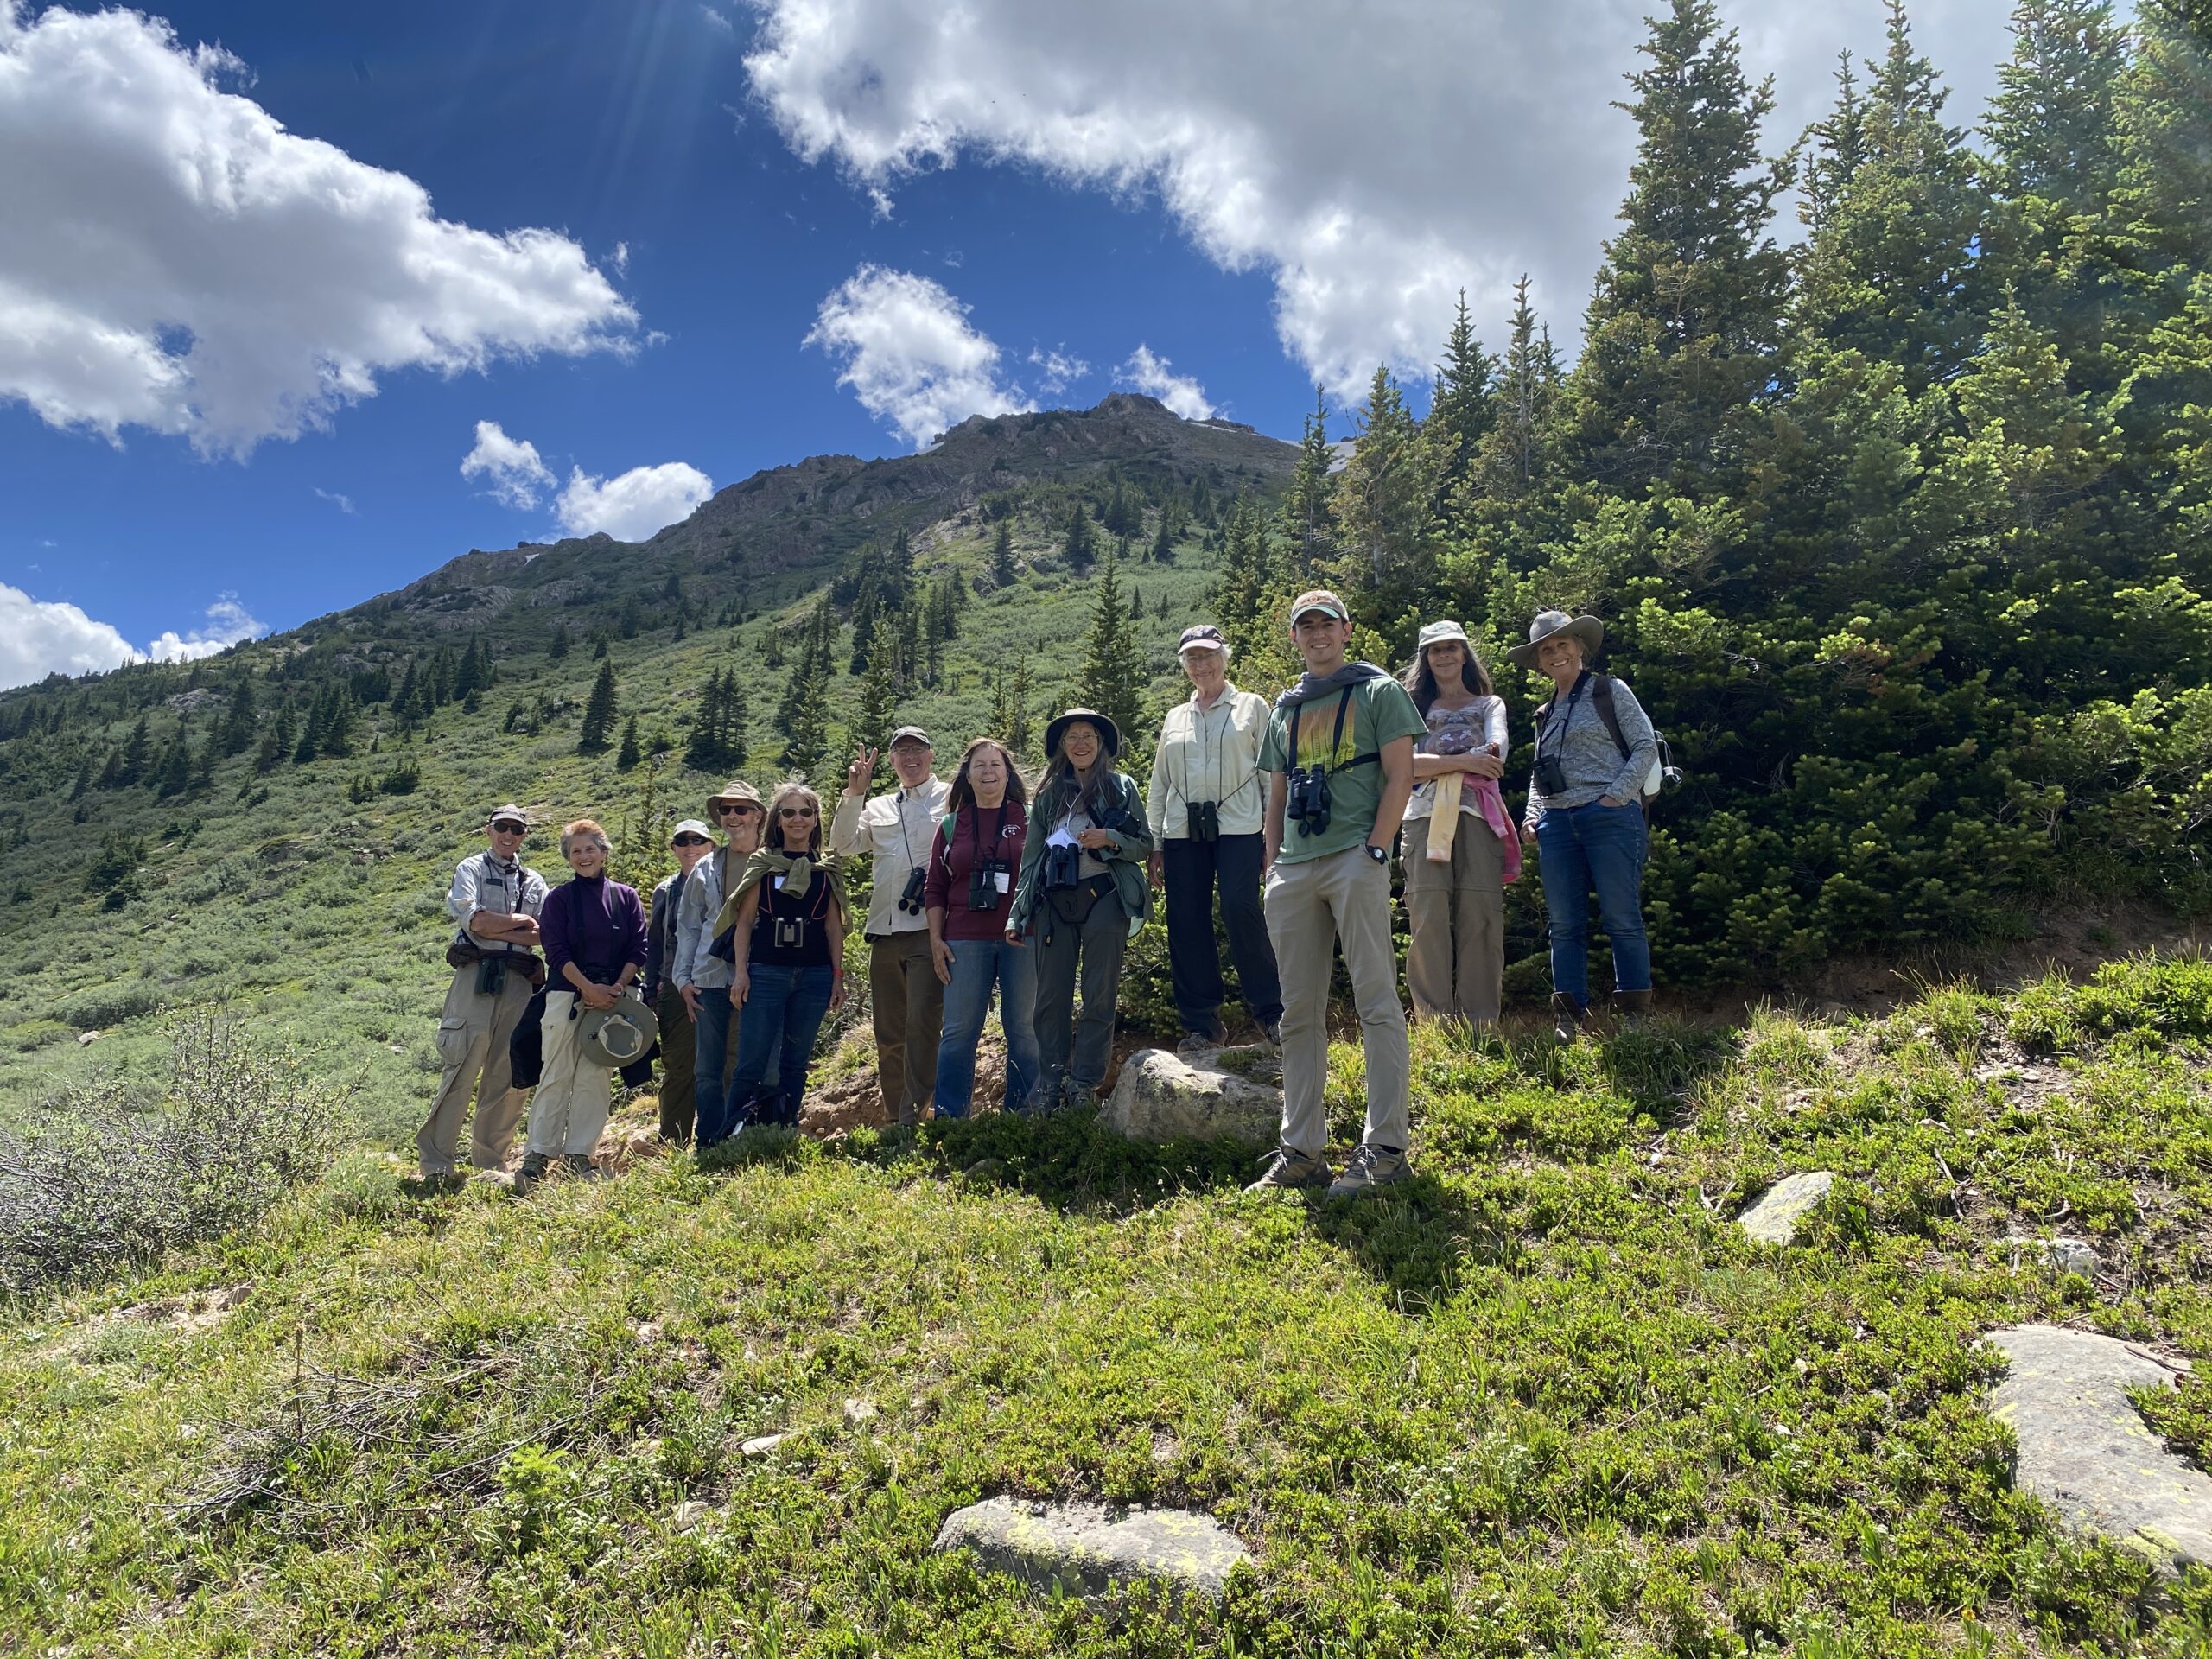 Group photo of 12 birders on a green high alpine slope. All have binoculars around their necks.